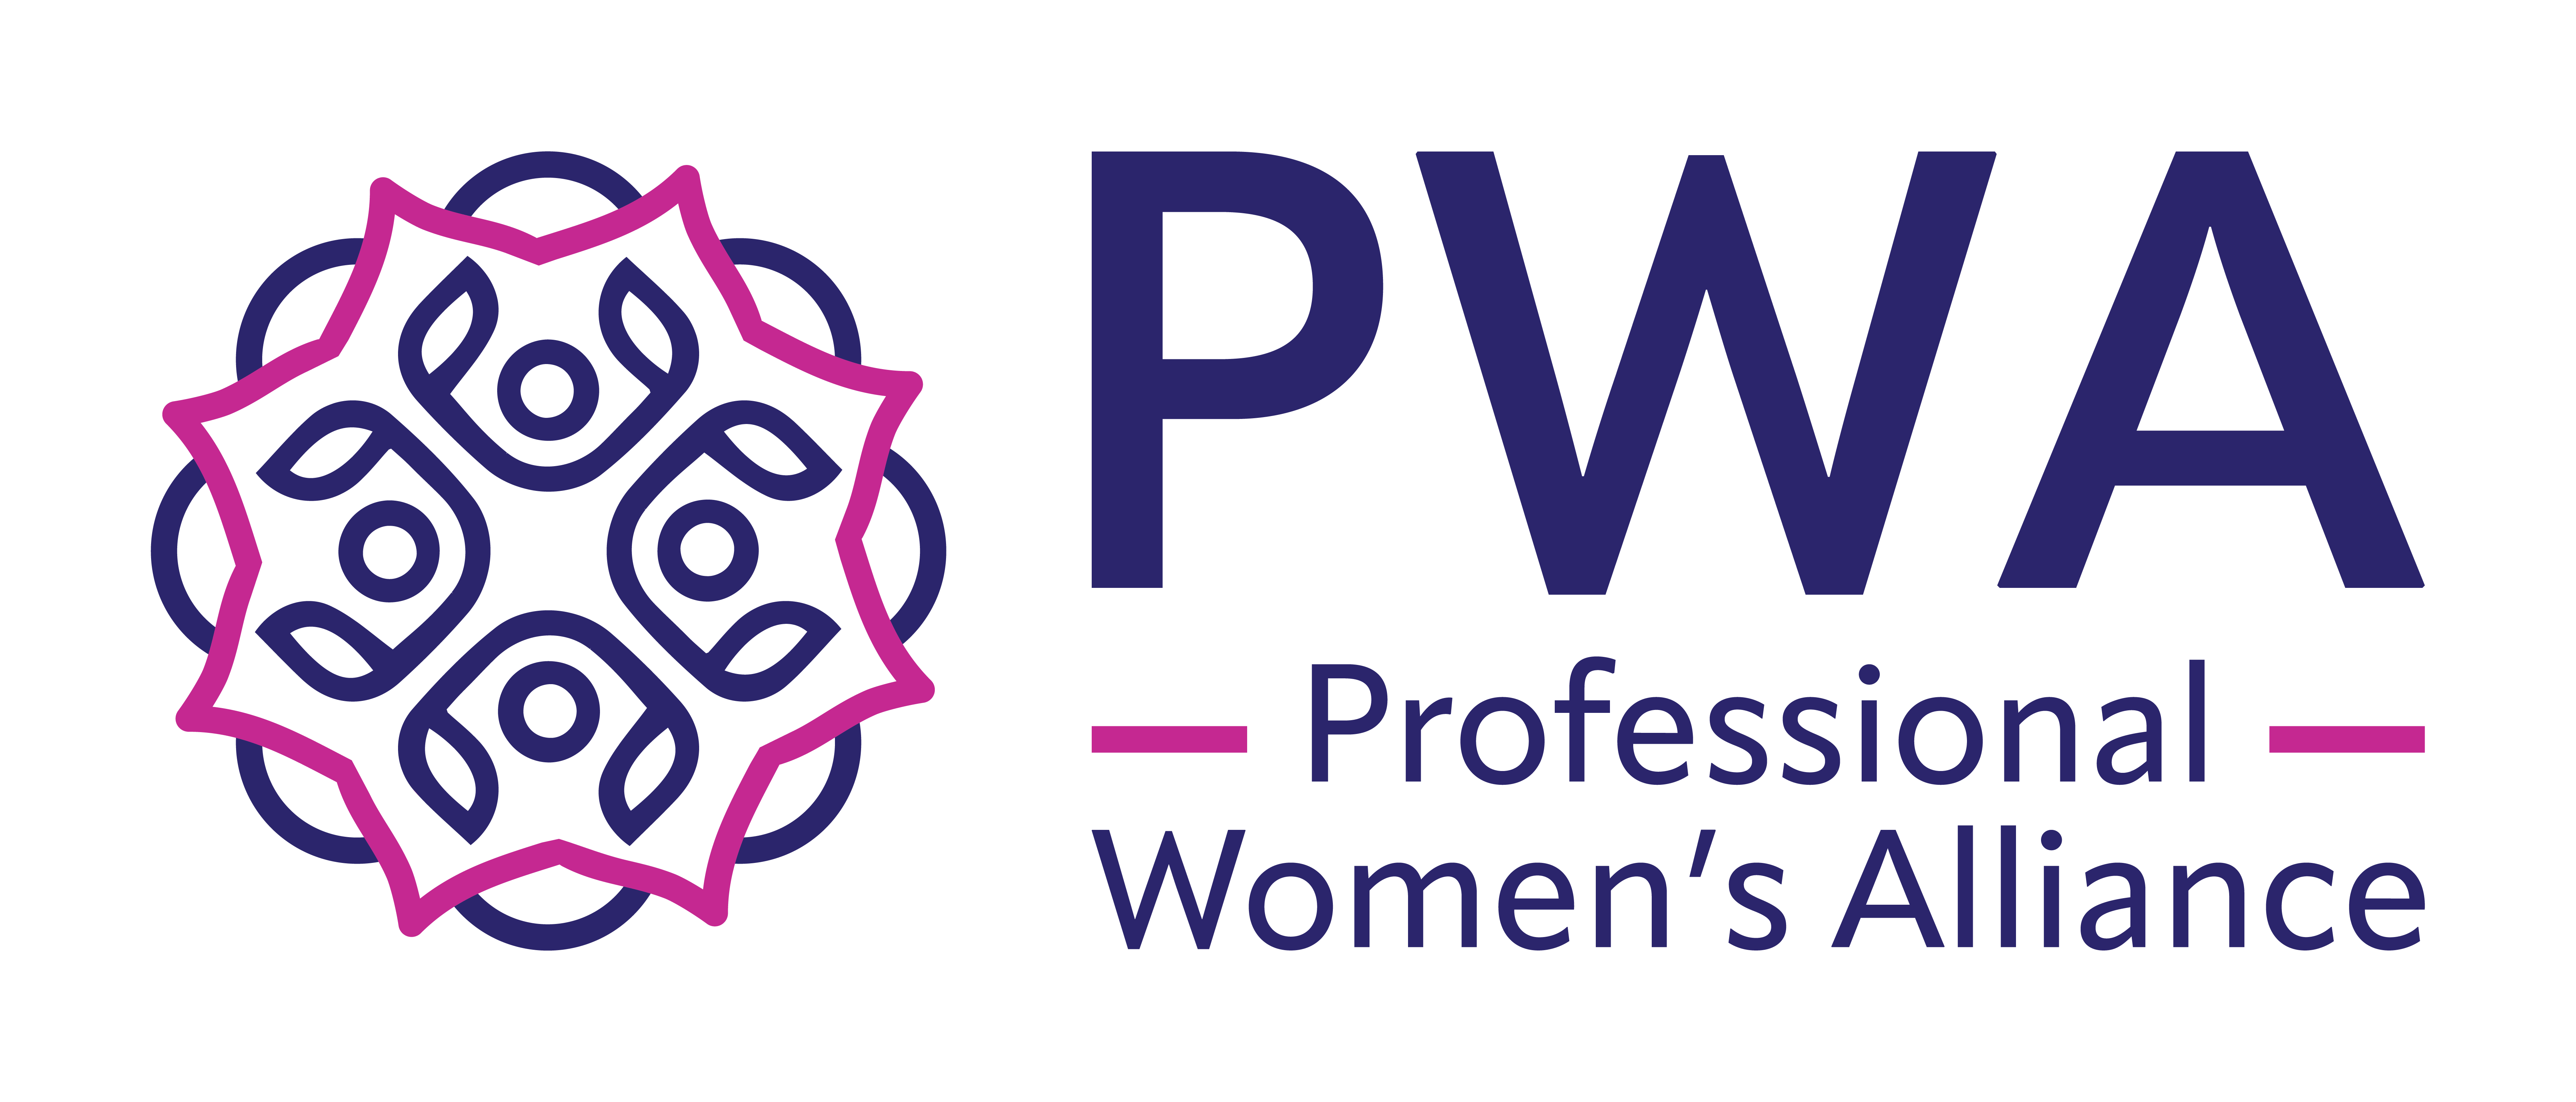 Professional Women's Alliance